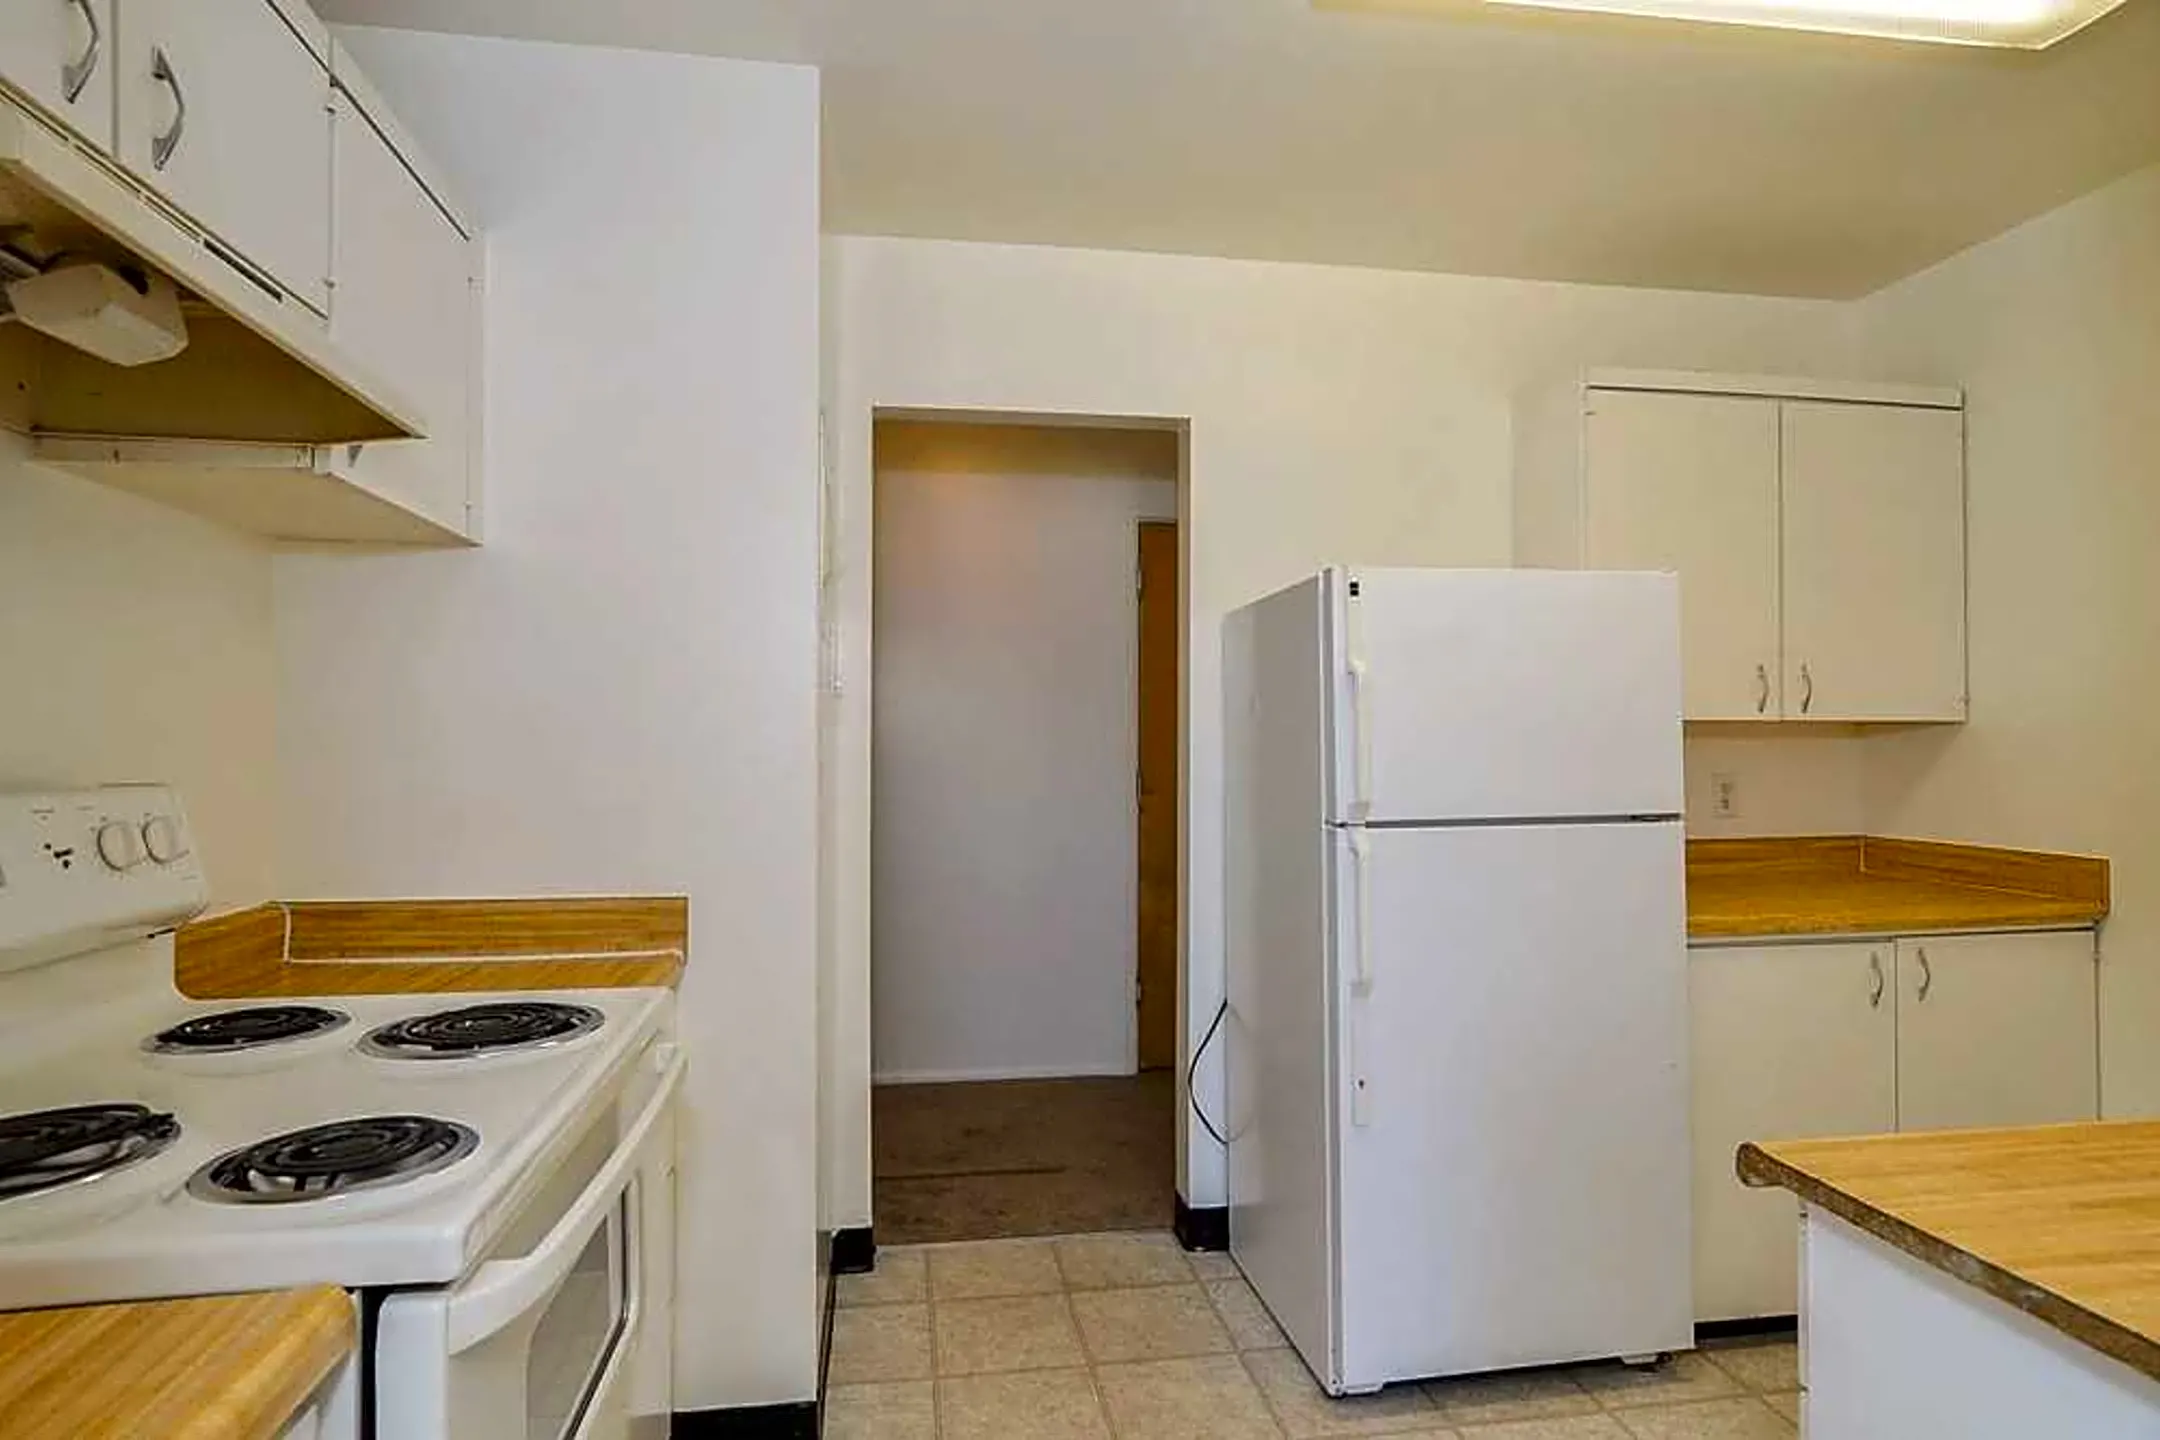 Kitchen - Bonne Villa Apartments - Ogden, UT